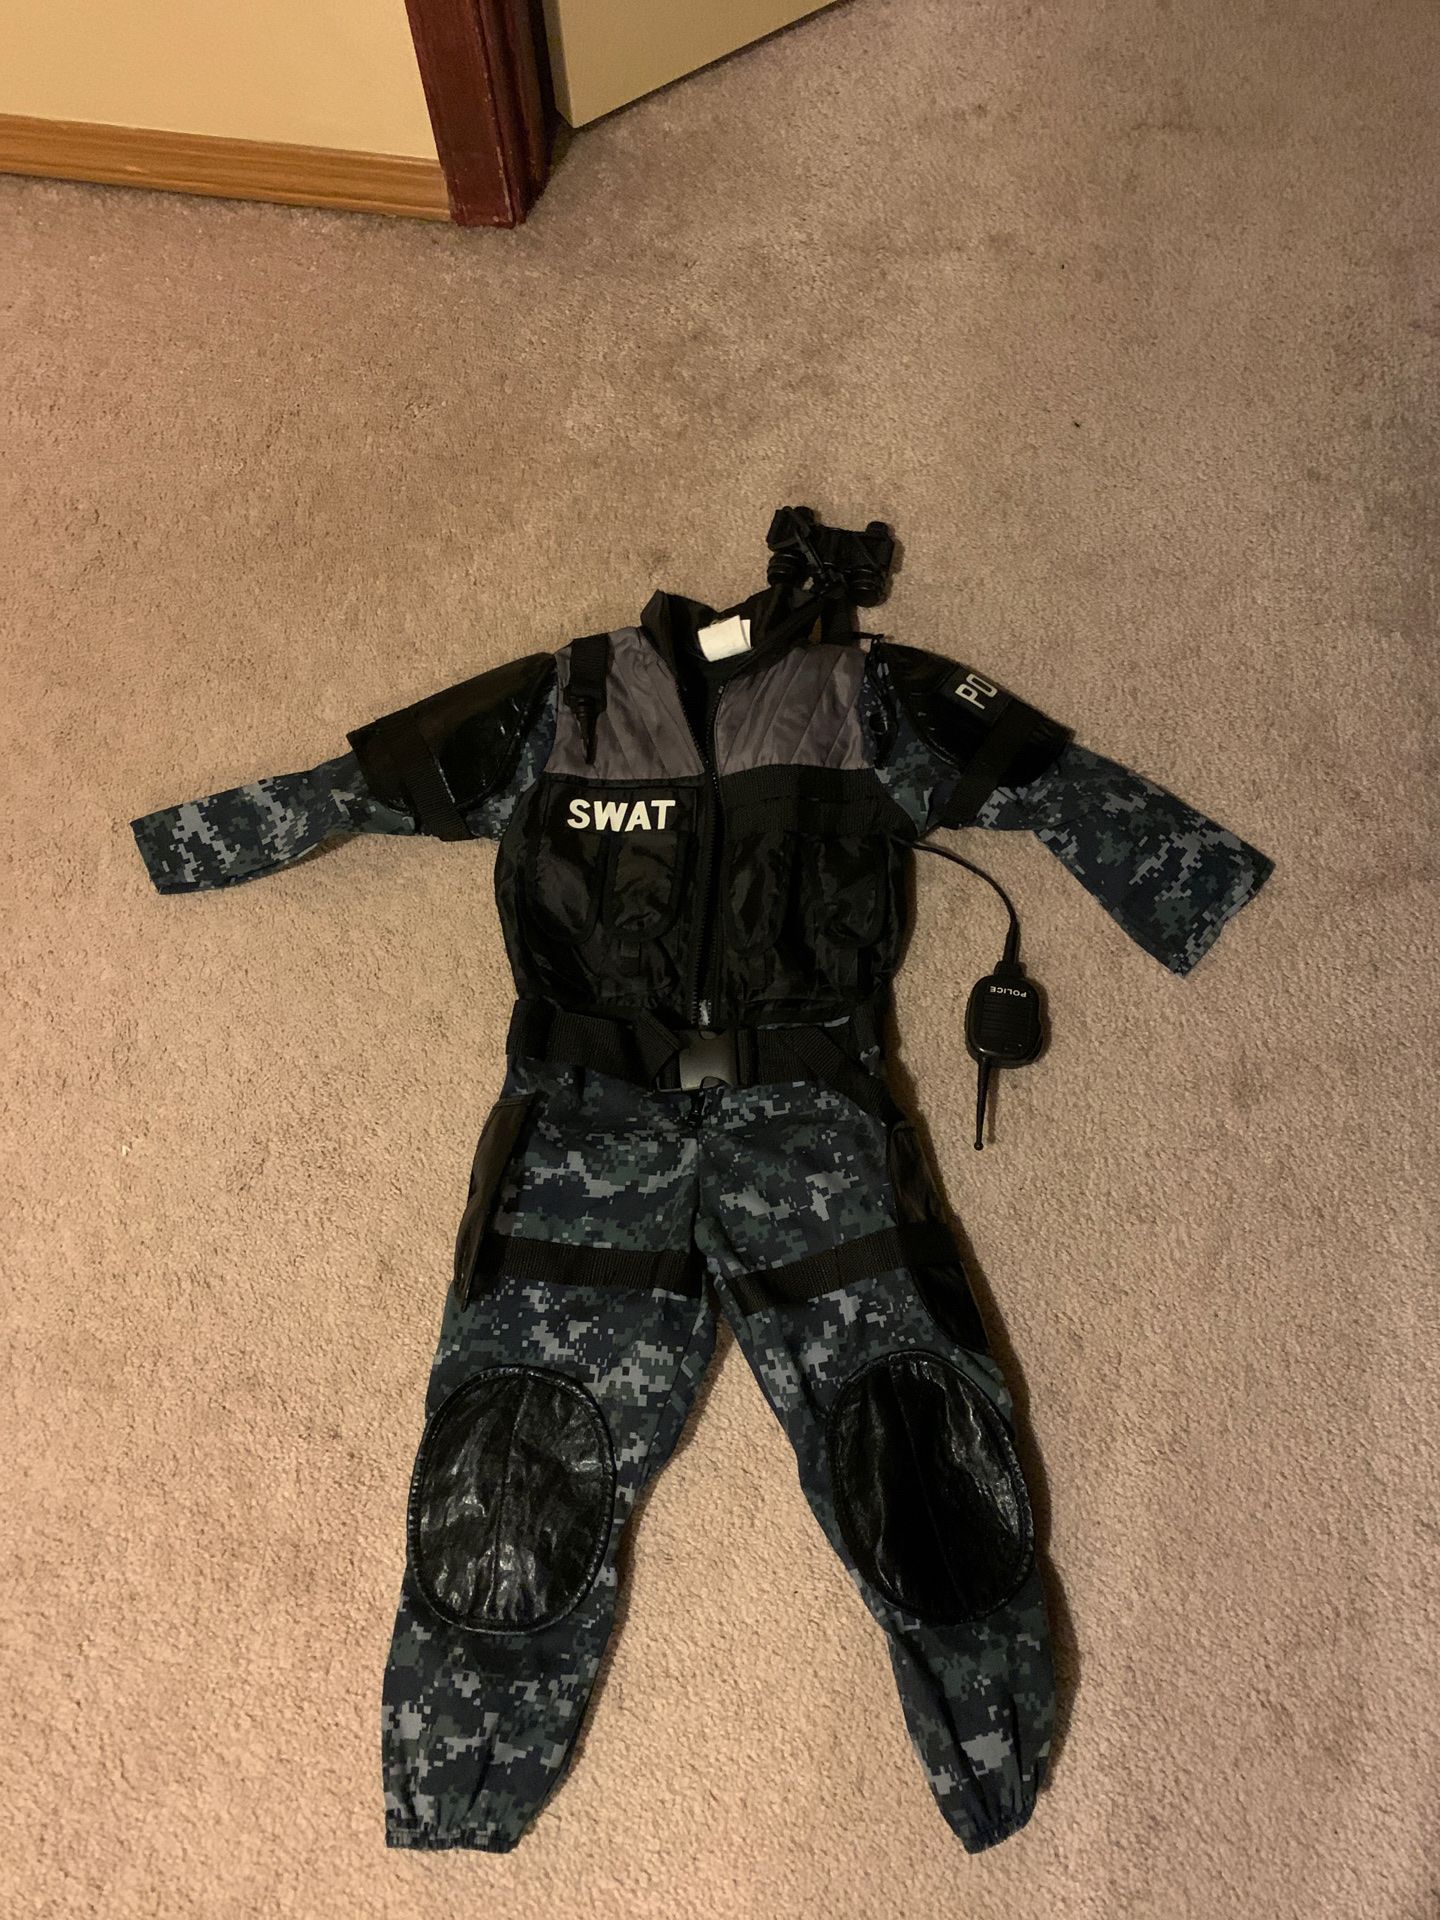 Swat costume size 3-4